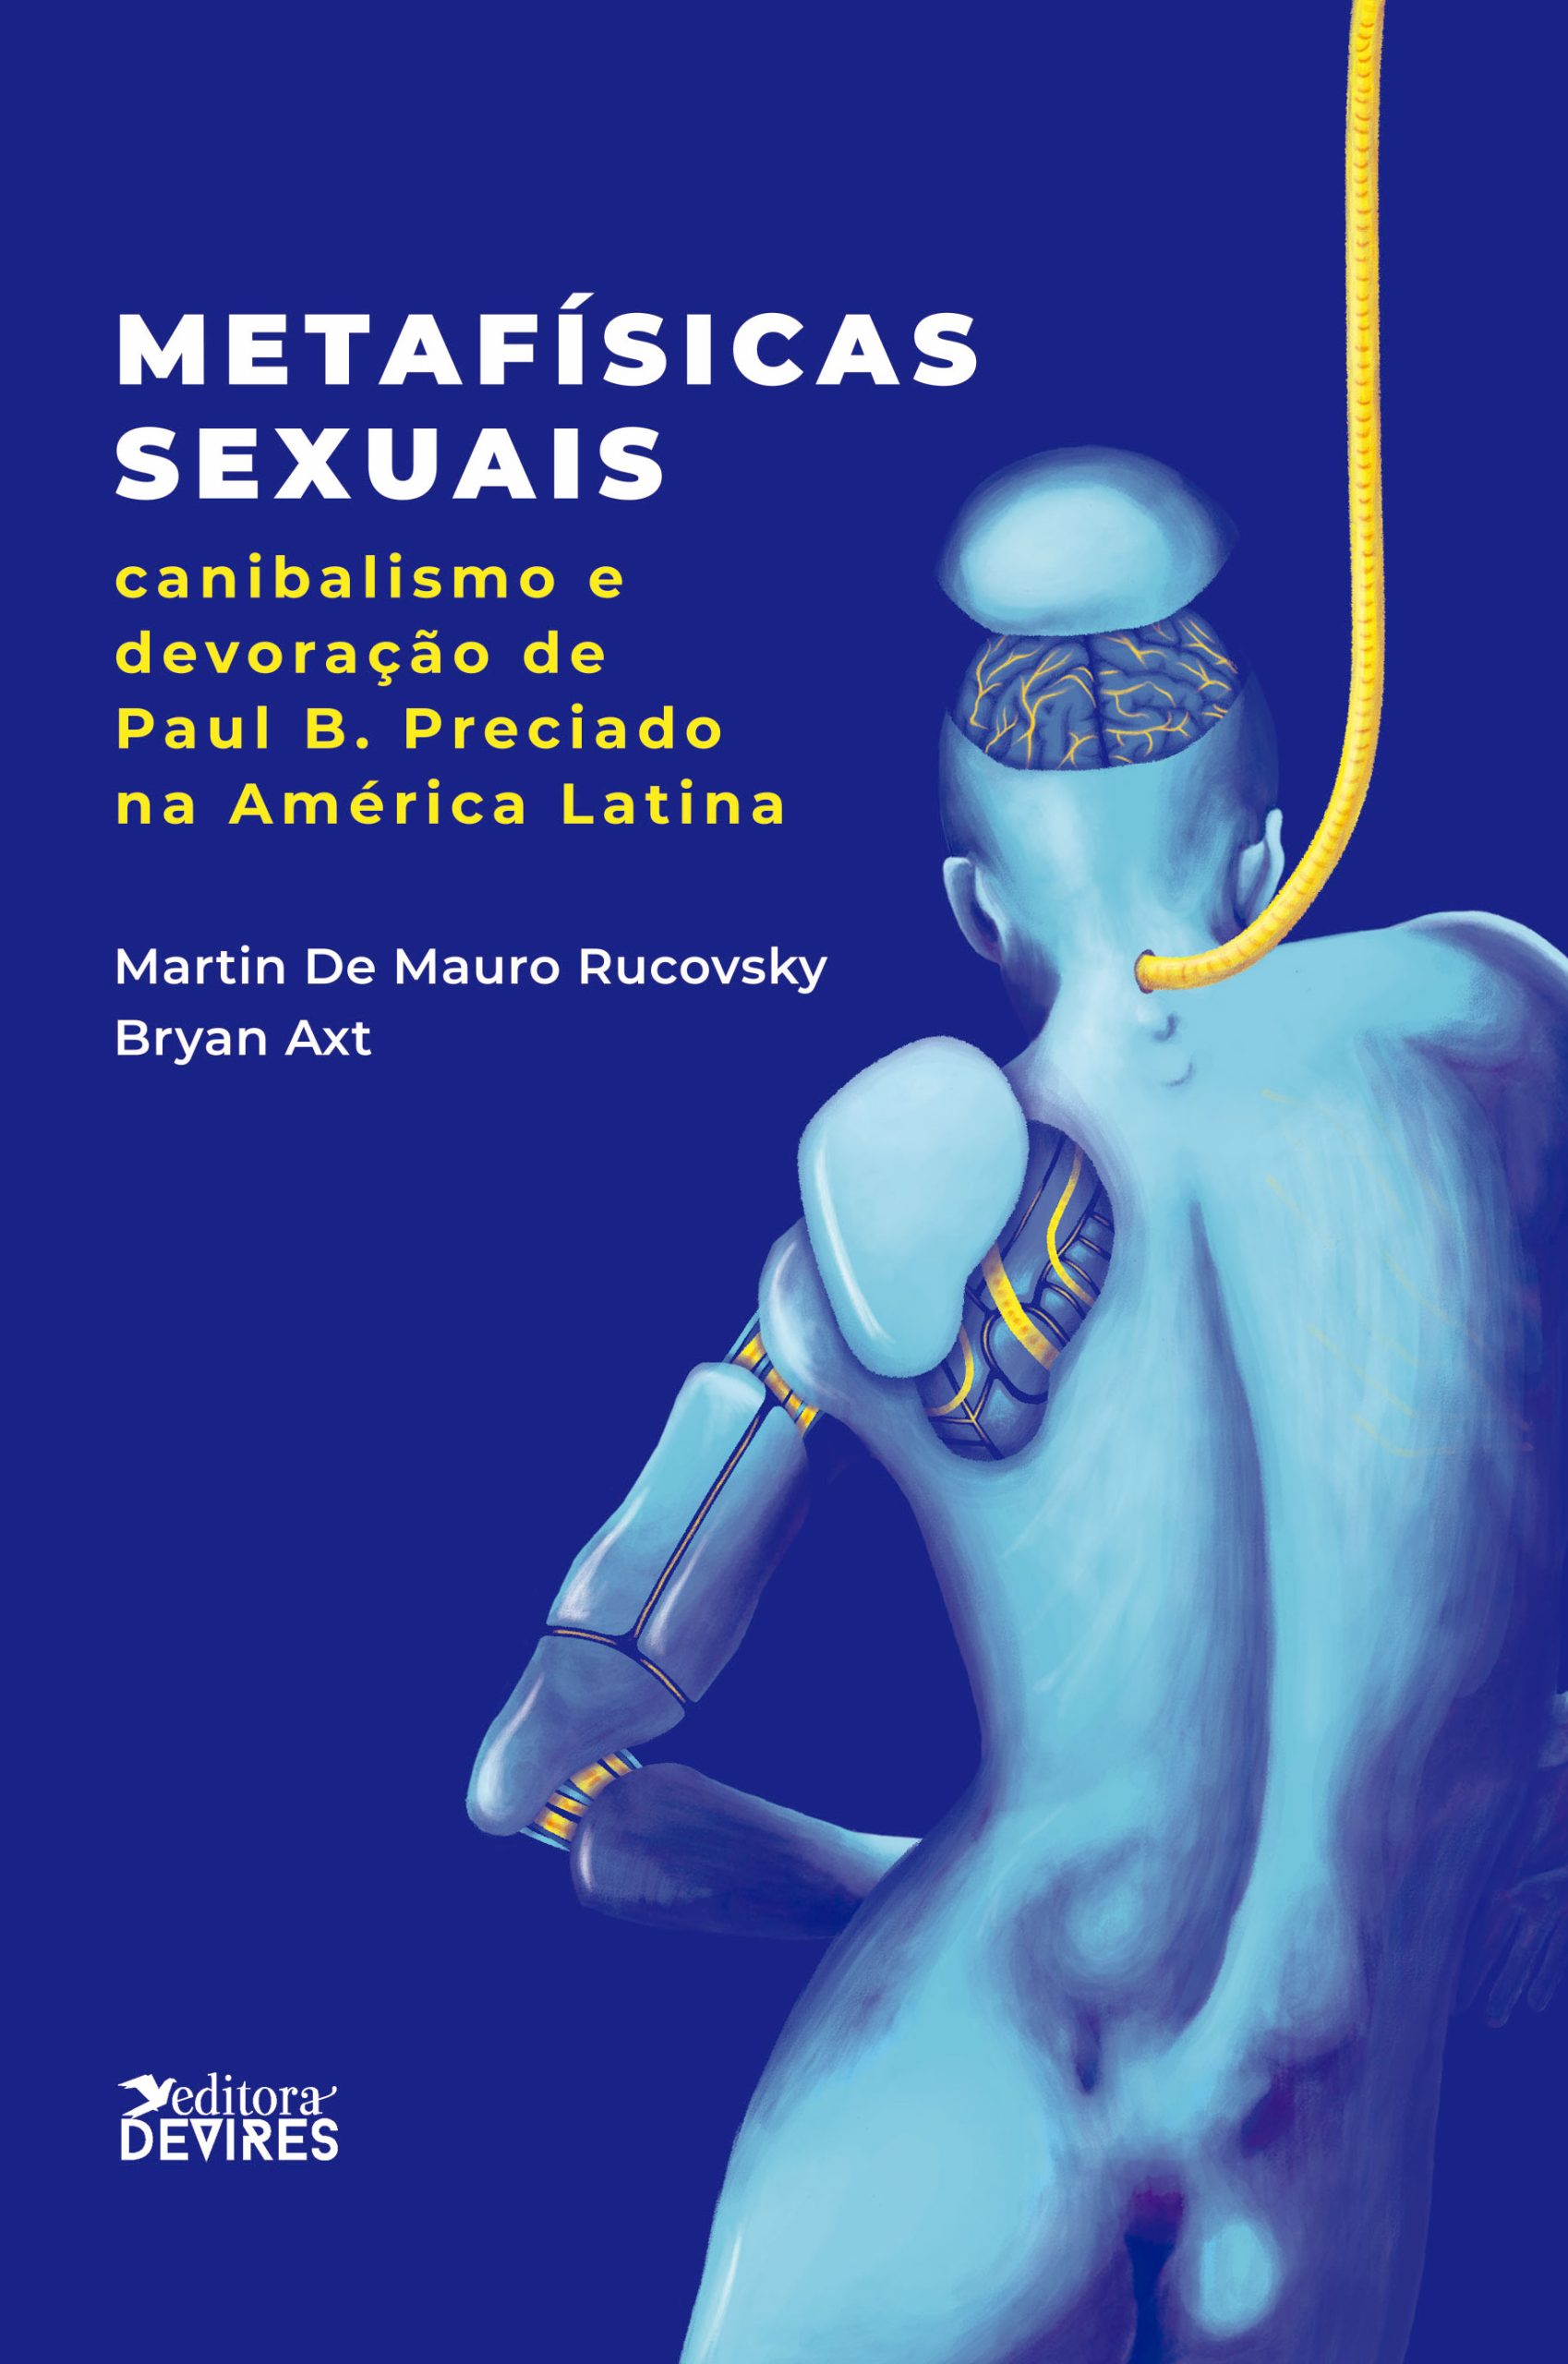 Livro explora as Metafísicas Sexuais de Paul B. Preciado na América Latina